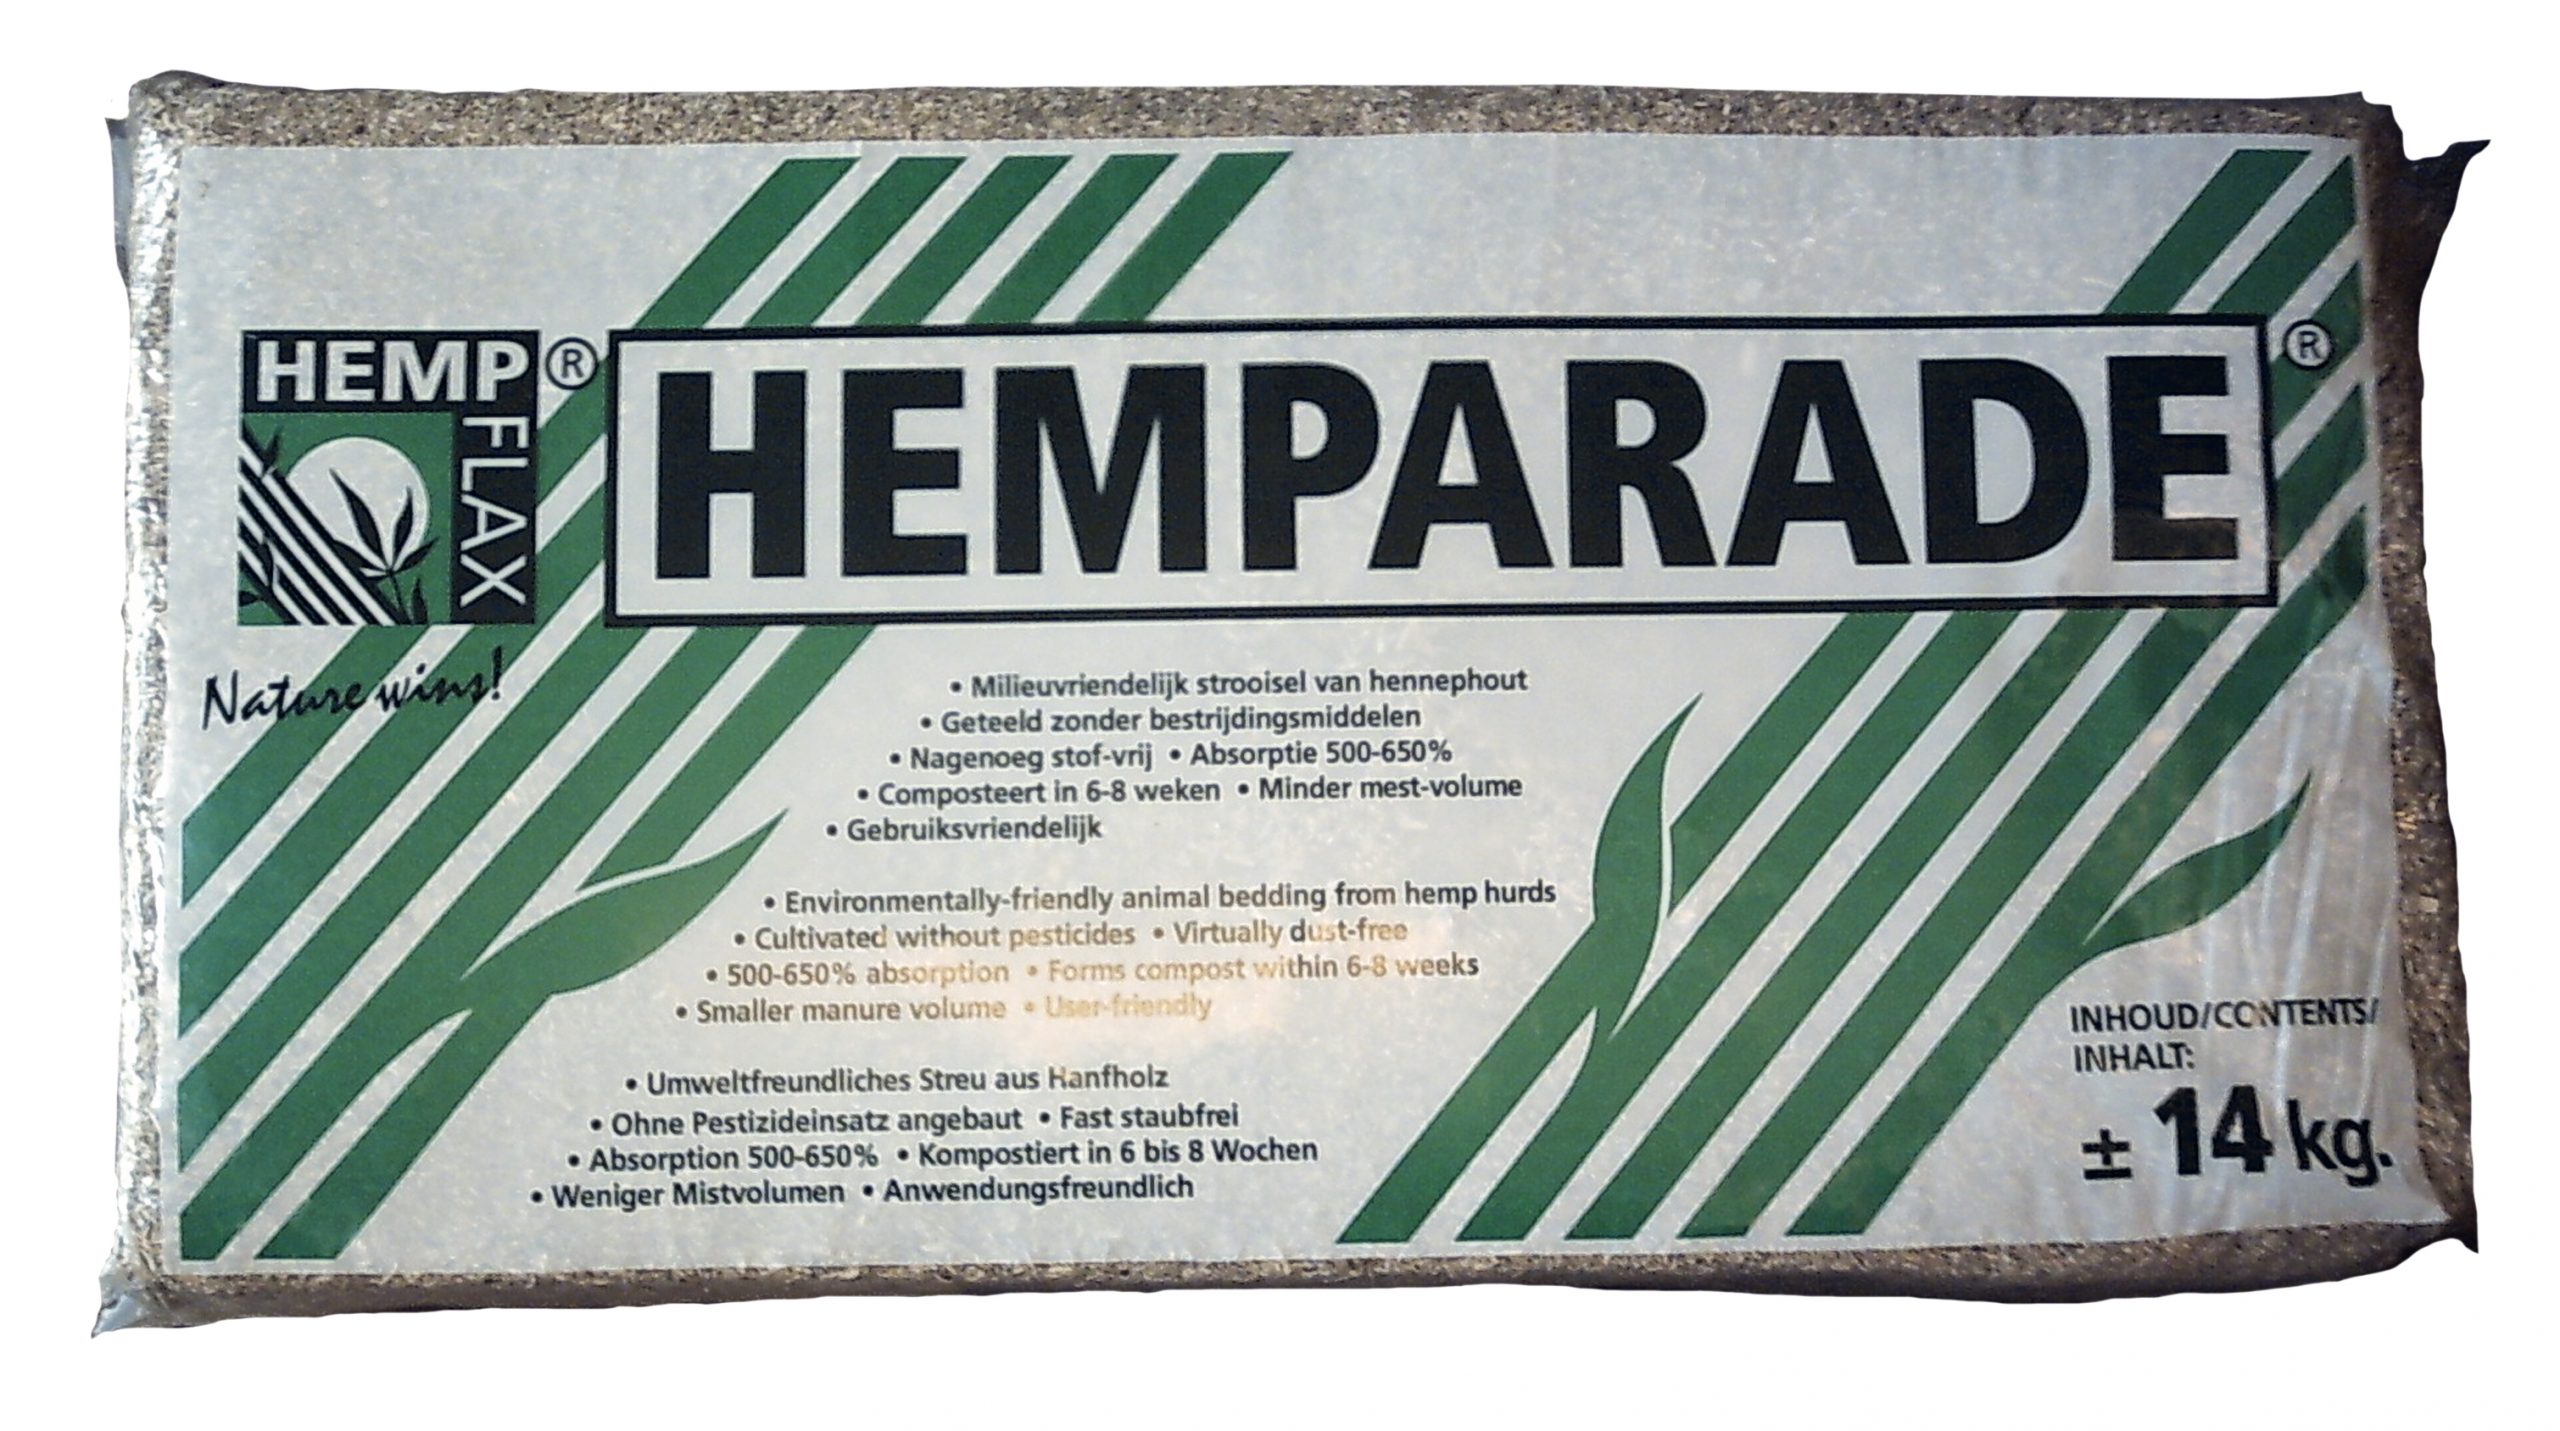 Hemparade Hemp hurd animal bedding for chickens and horses